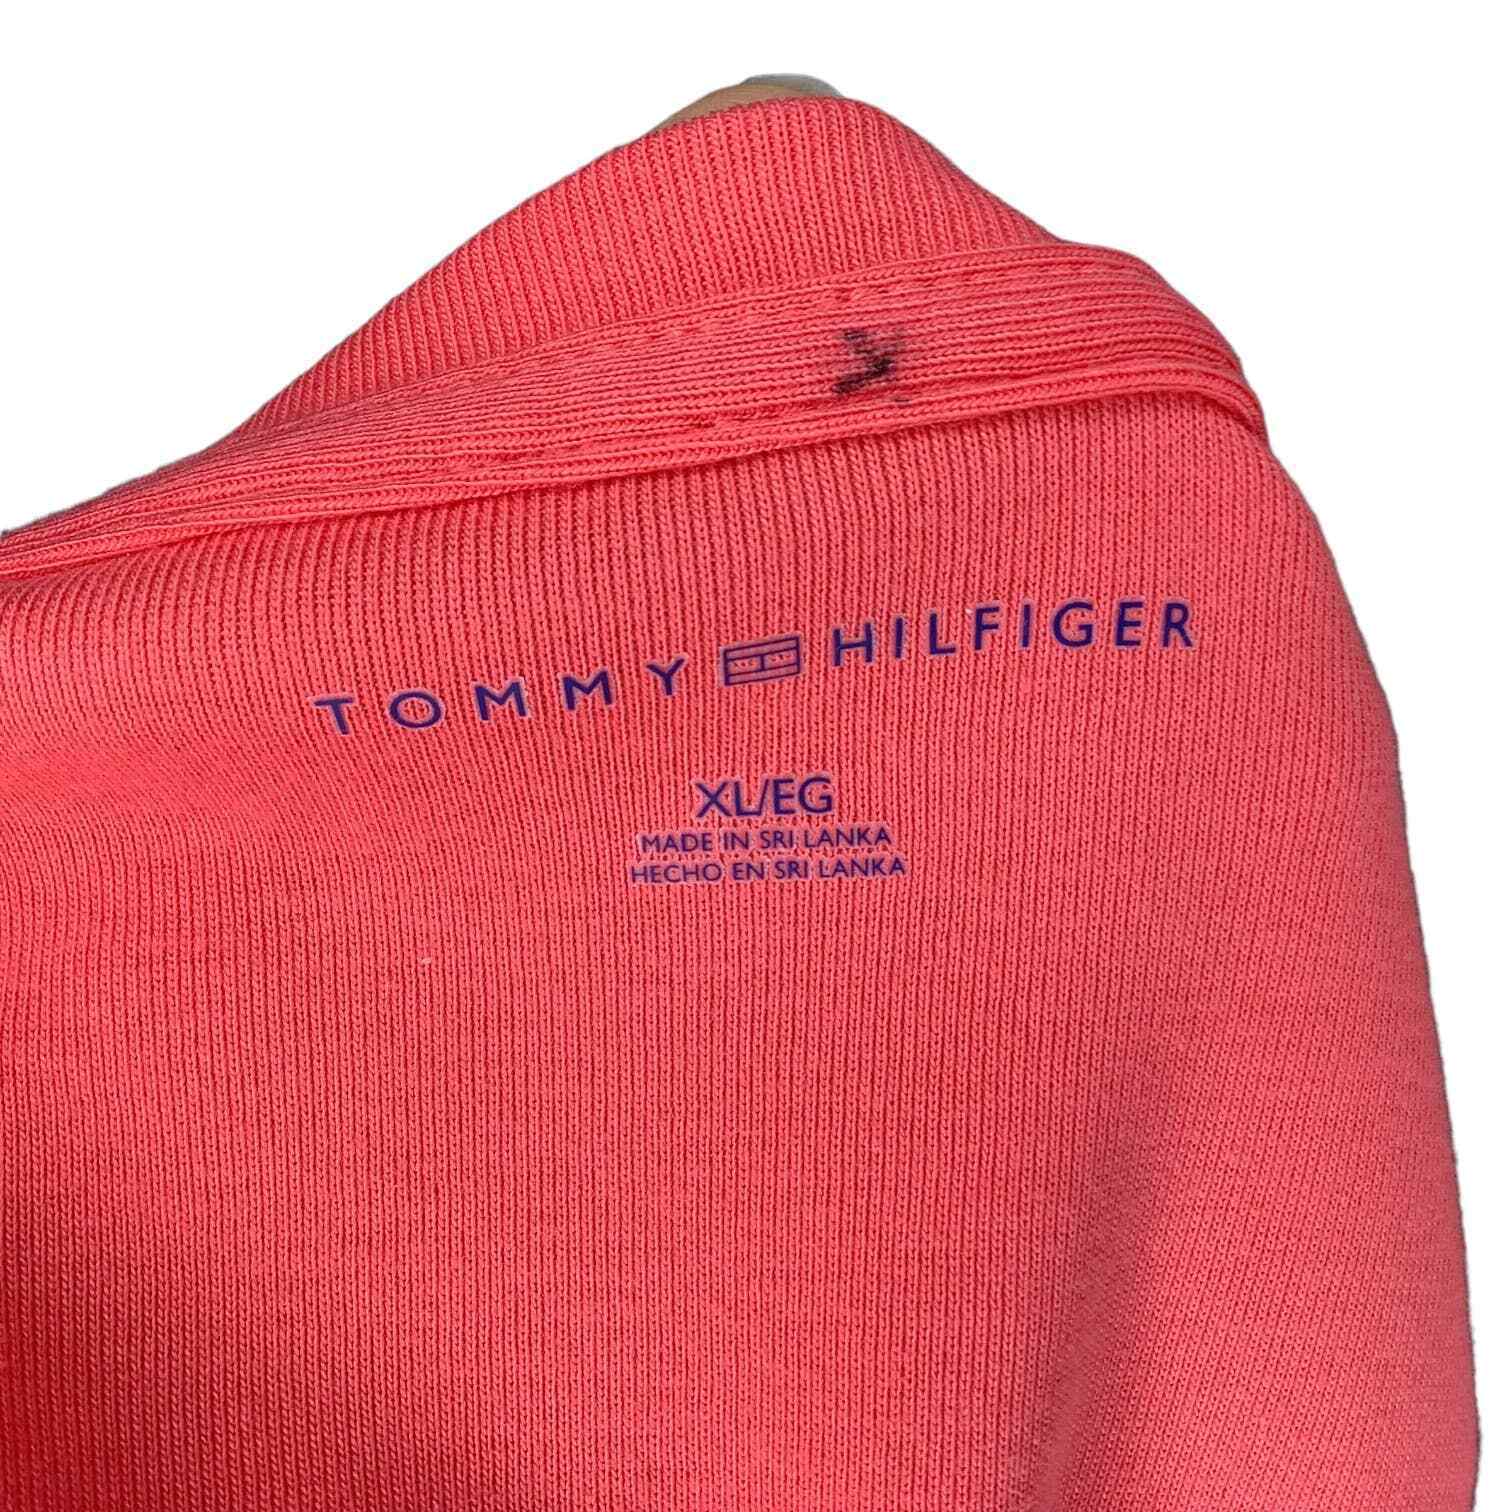 Tommy Hilfiger Womens Short Sleeves T-Shirt